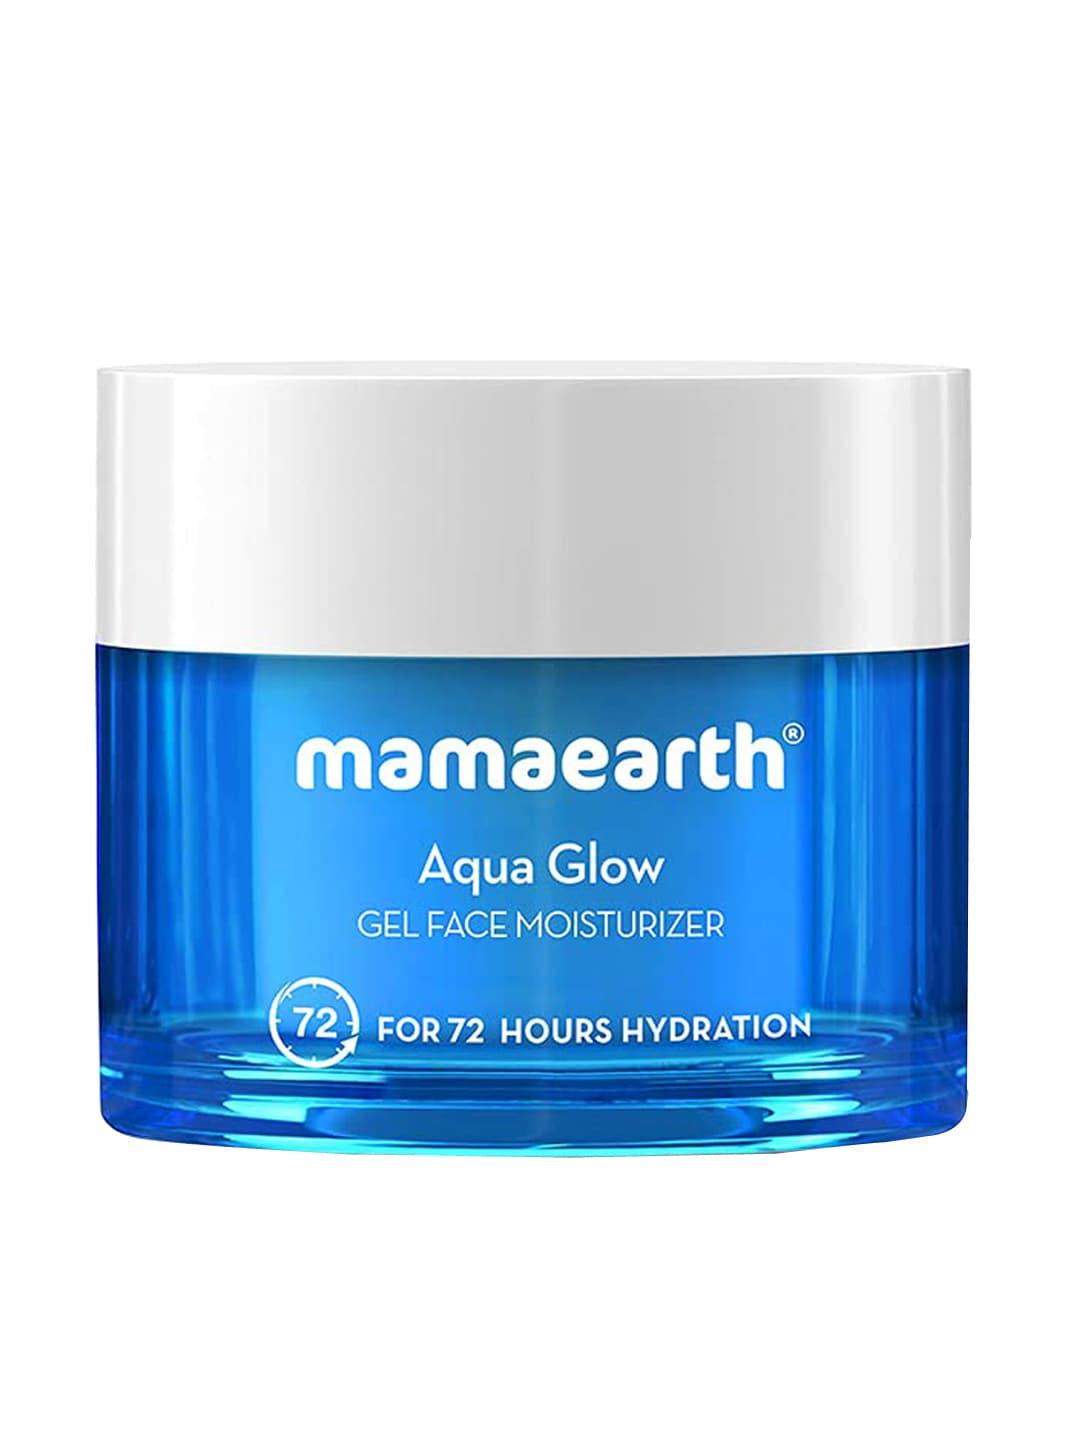 mamaearth aqua glow gel moisturizer - himalayan thermal water &hyaluronic acid - 100 ml